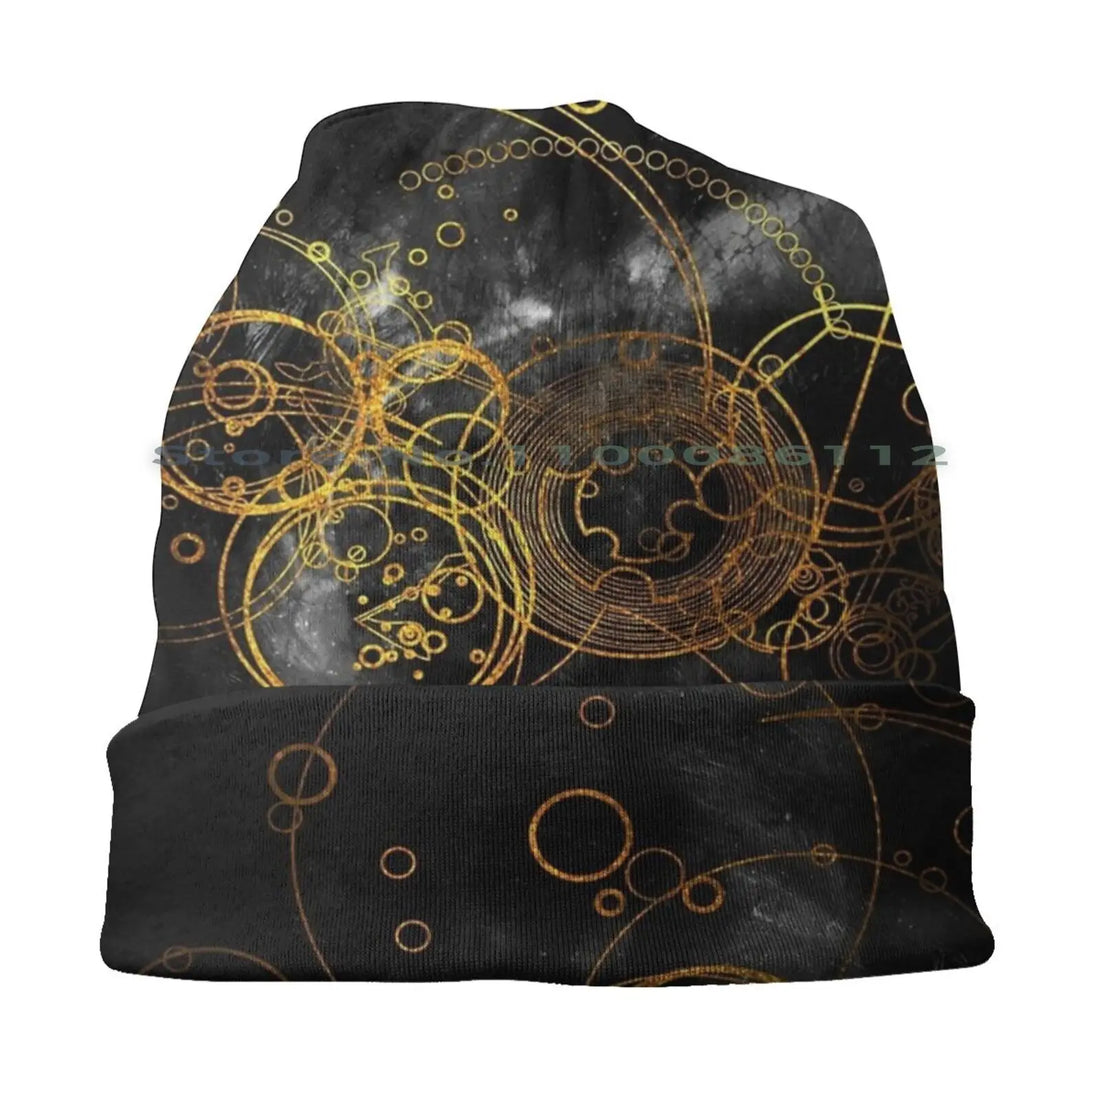 Writing ( Black ) Bucket Hat Sun Cap Tardis Dalek Space Fantasy Science Sci Fi Glitter Magic Vintage Vivid Modern Contemporary